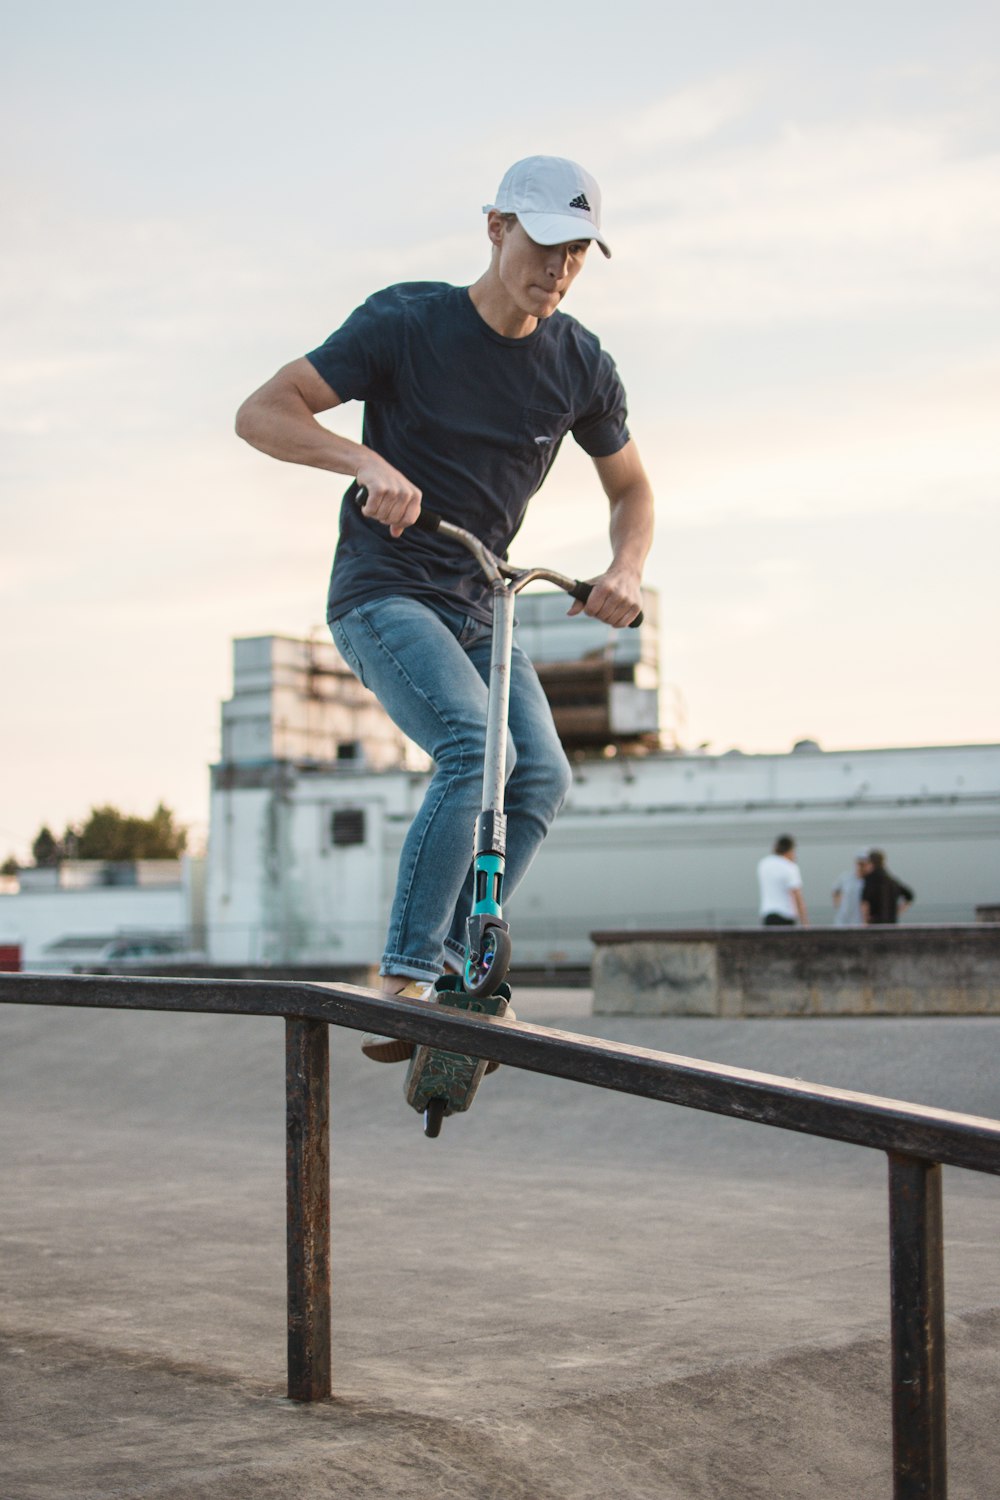 man riding on kick scooter doing tricks